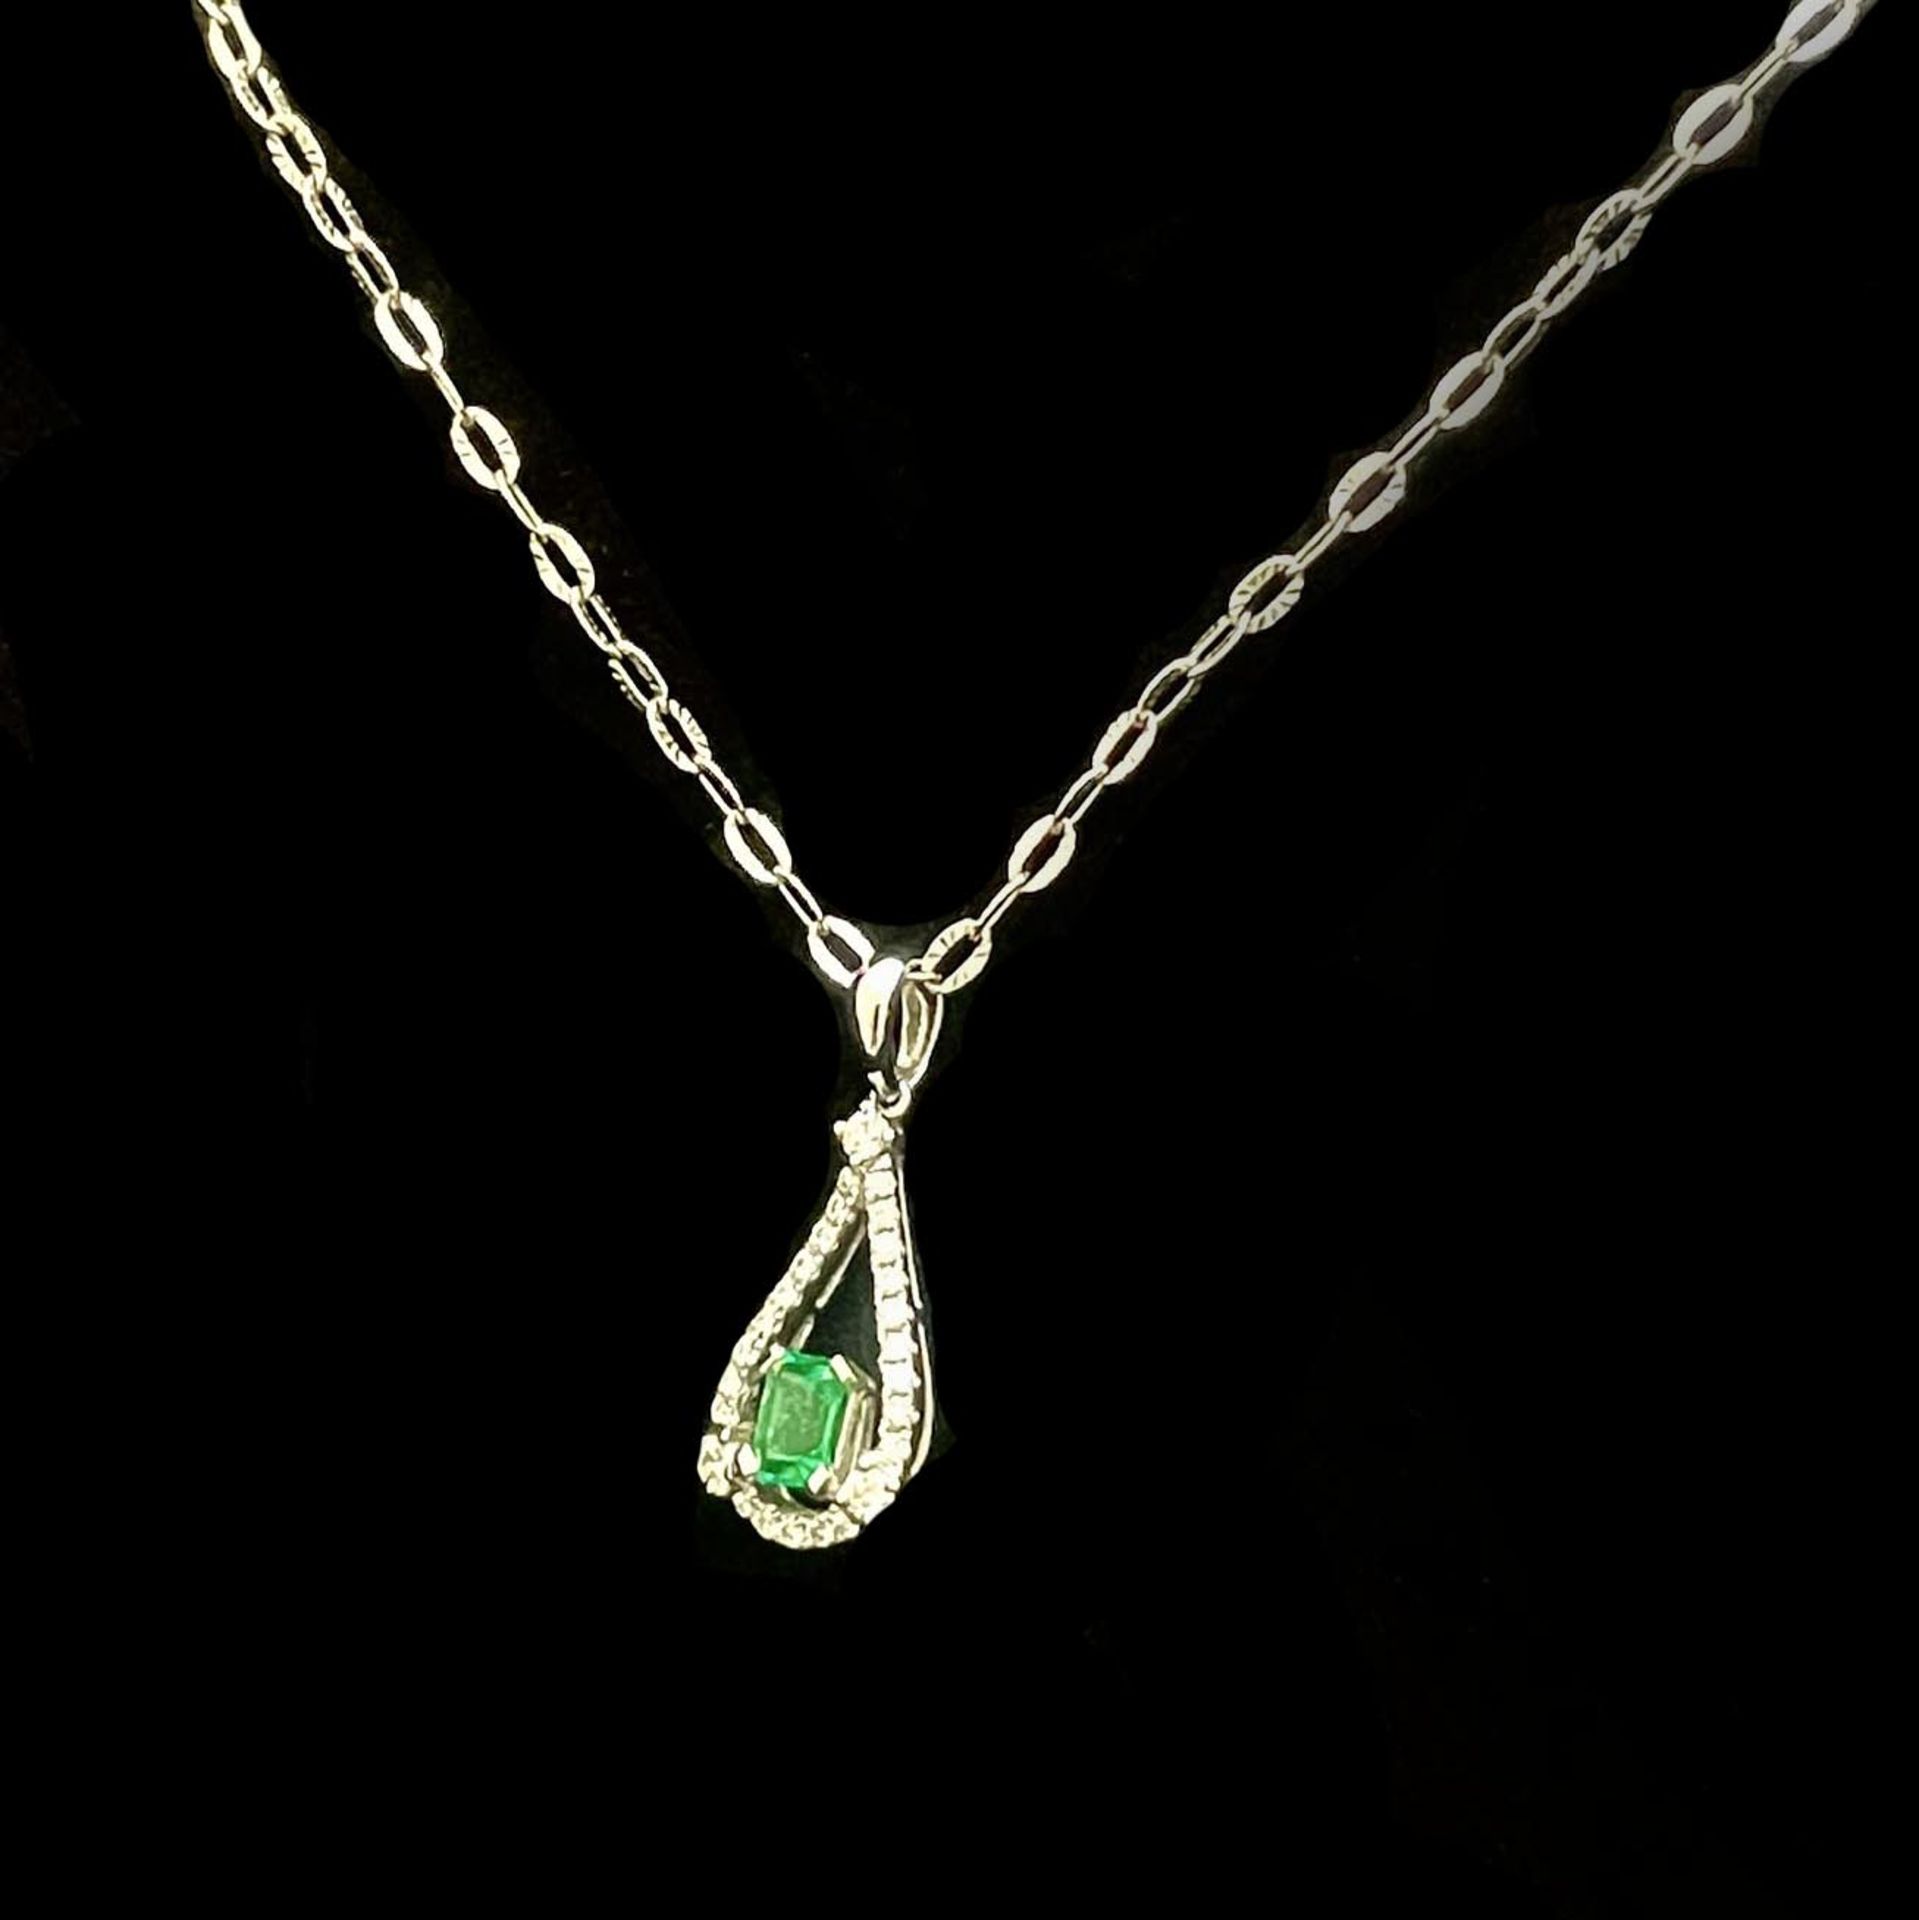 18kt white gold teardrop pendant, diamonds and emerald.